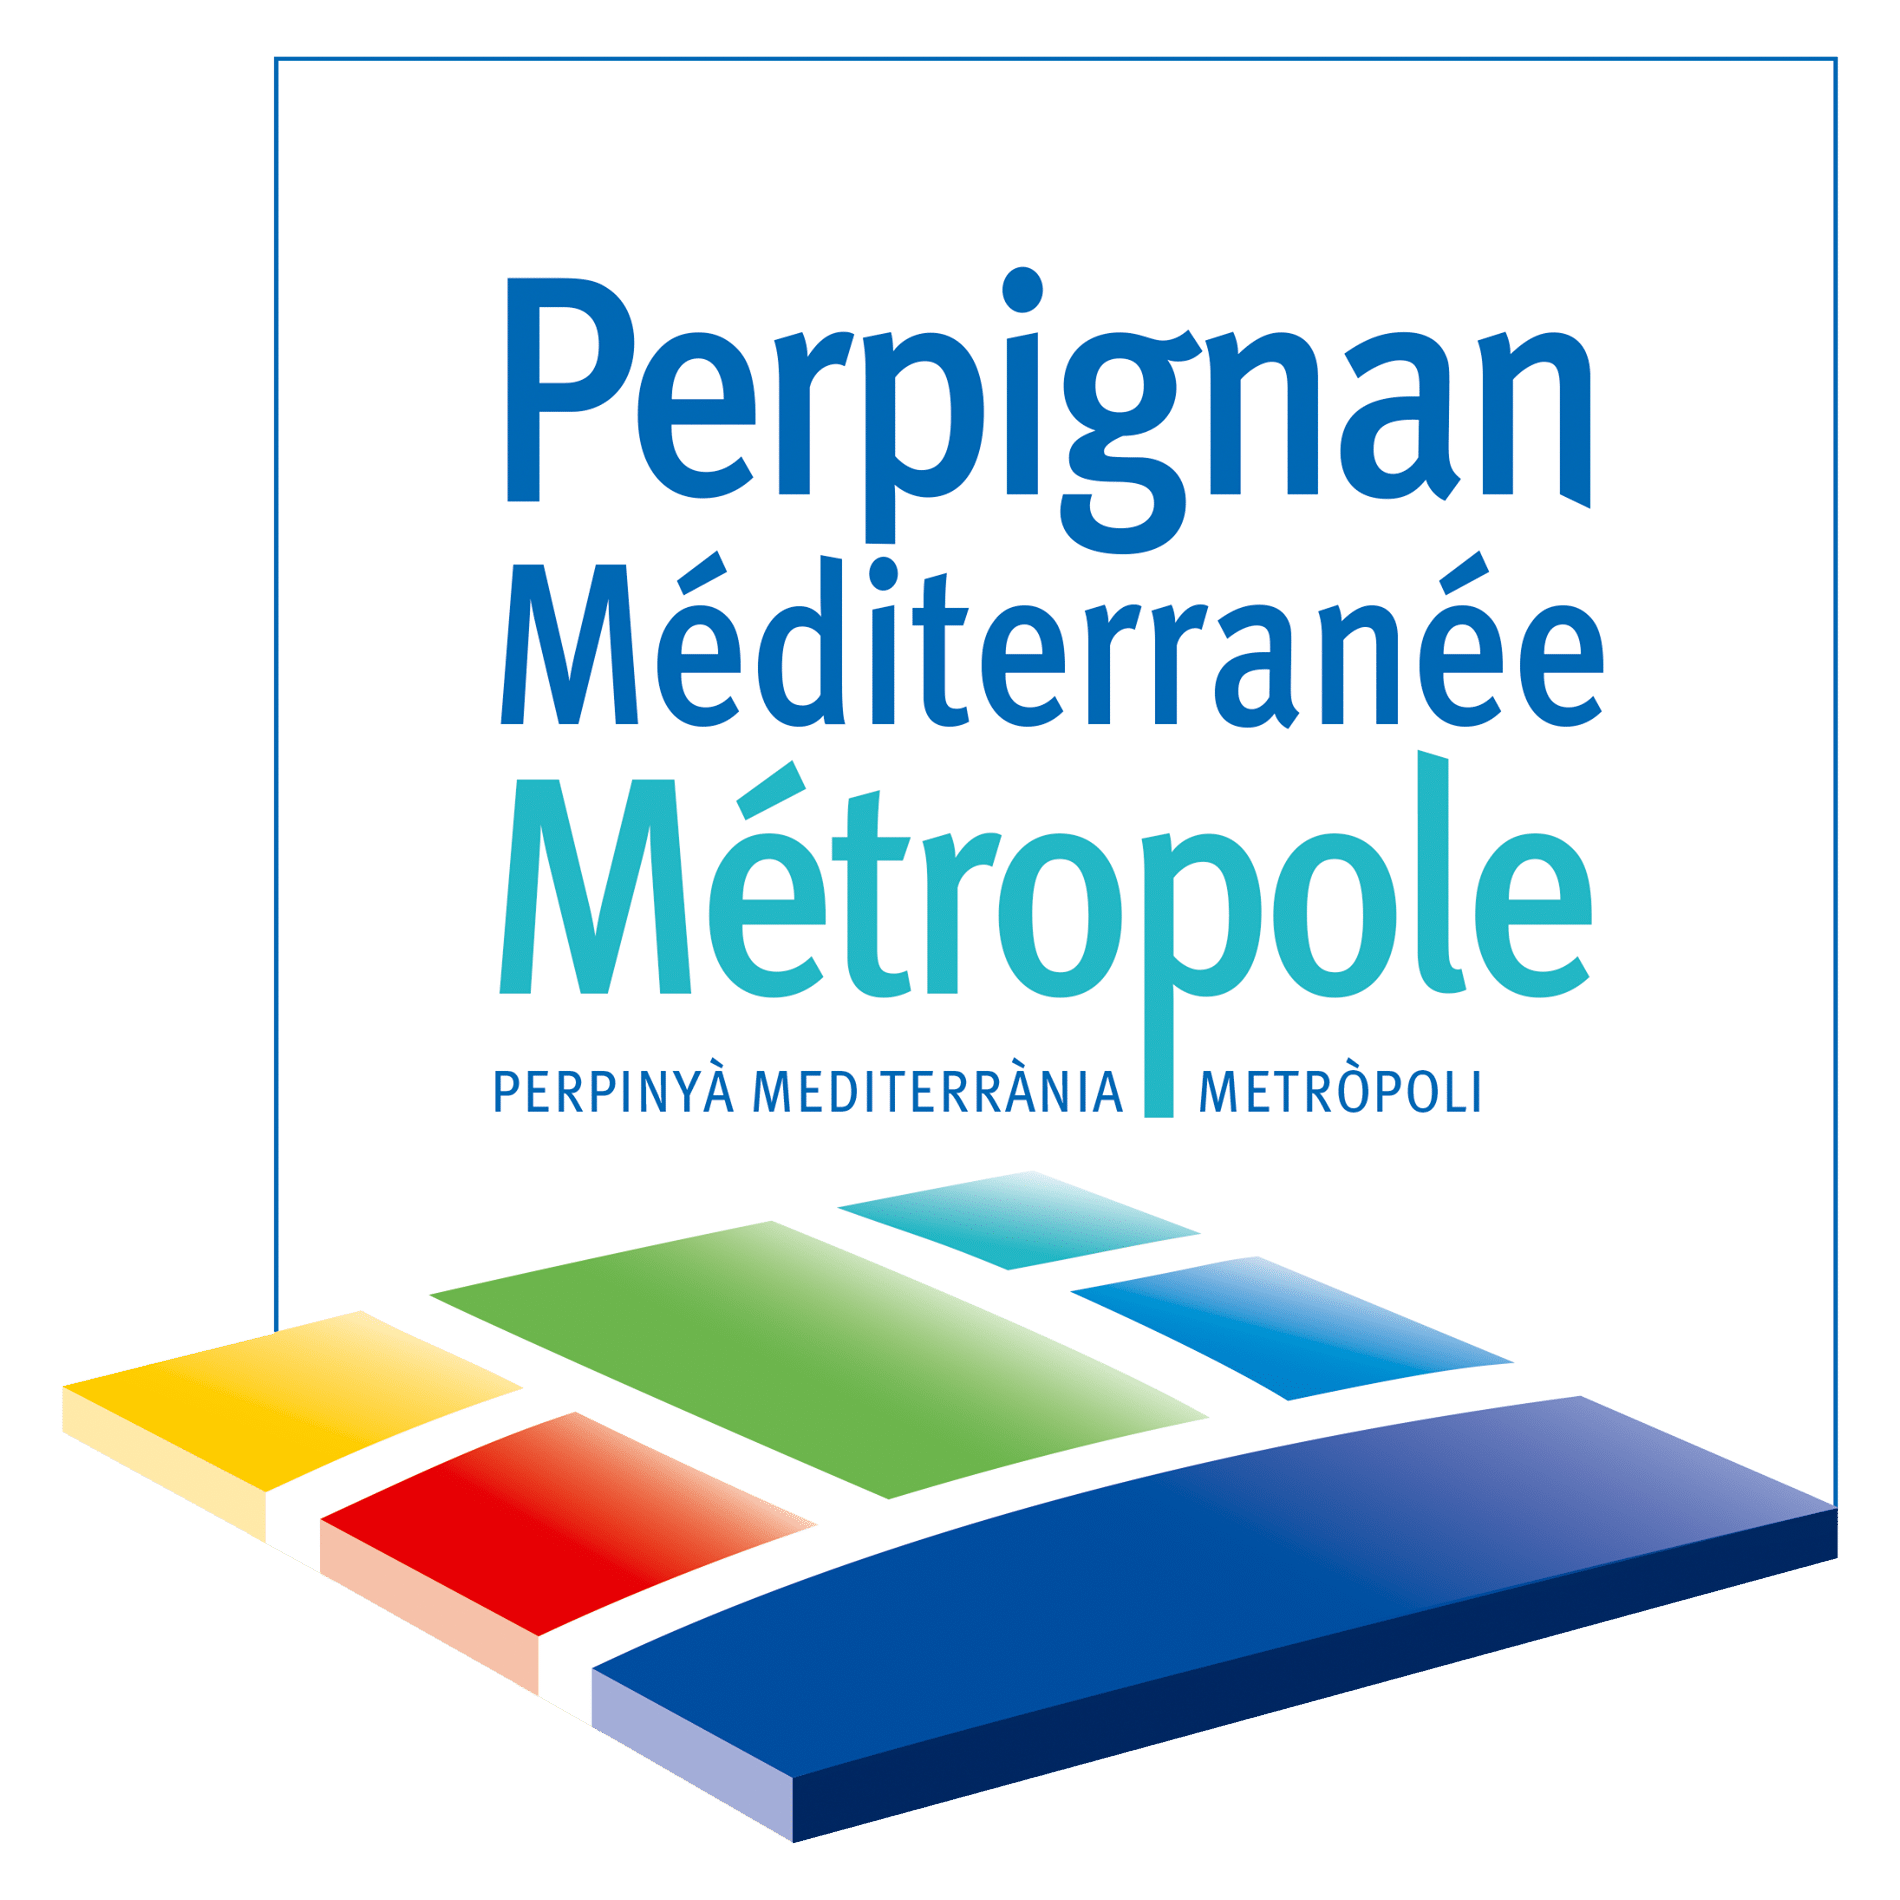 Perpignan Mediterranee Metropole